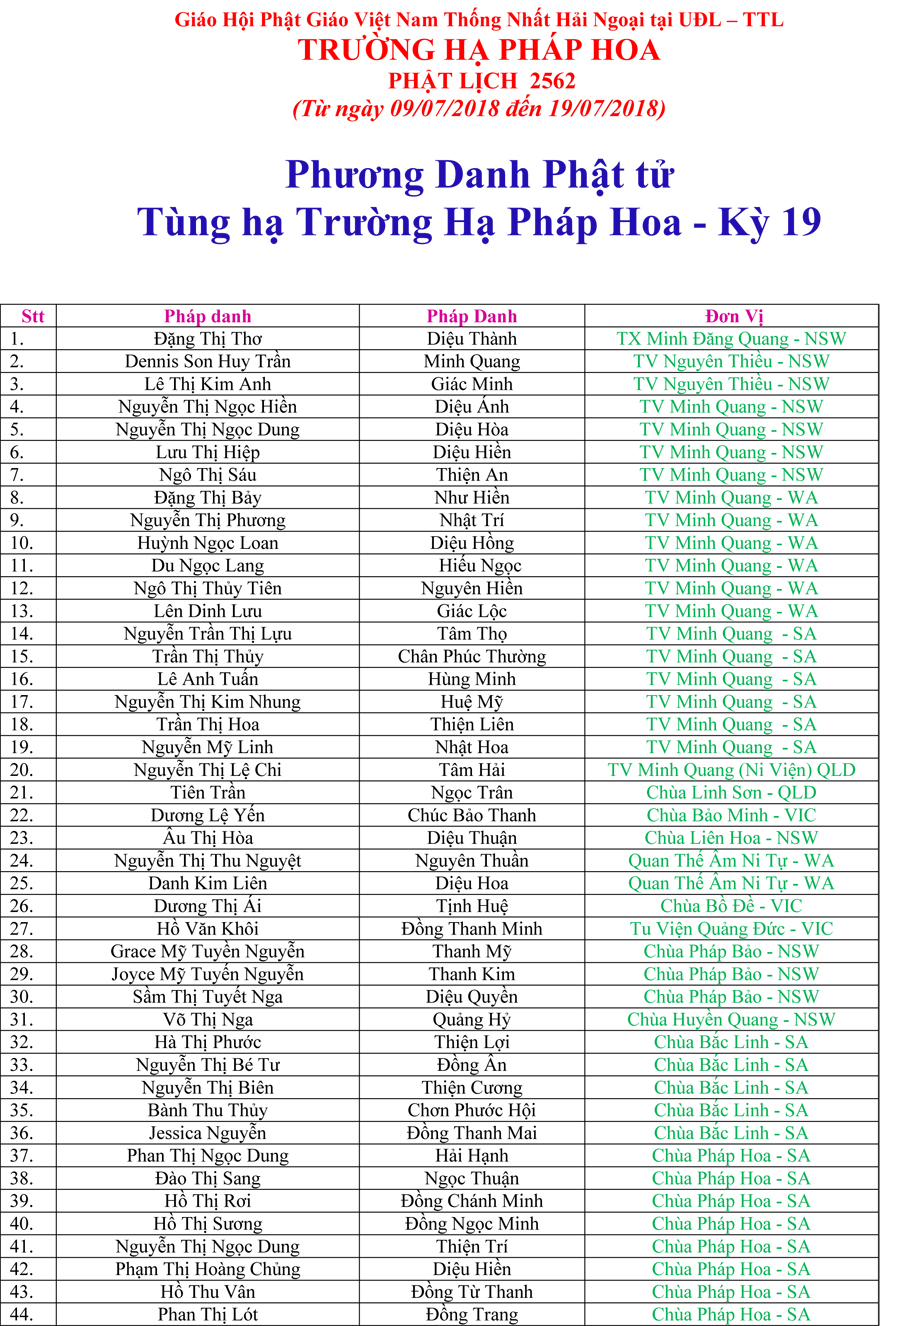 Danh sach Phat tu Tung Ha va cong qua -18-7-2018